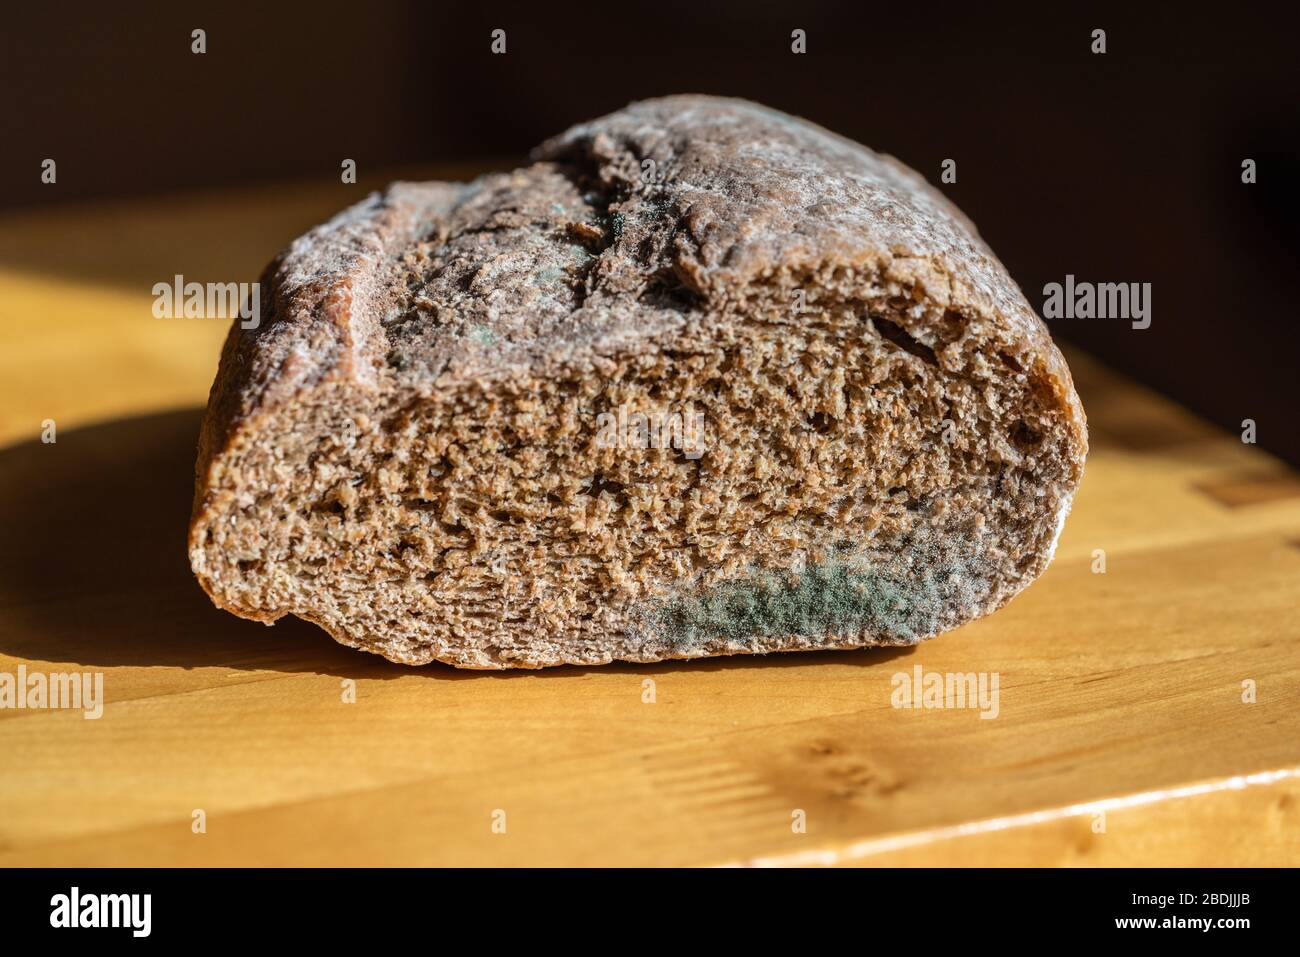 Premium Photo  Bread mold, rhizopus, fungi on an aged bread